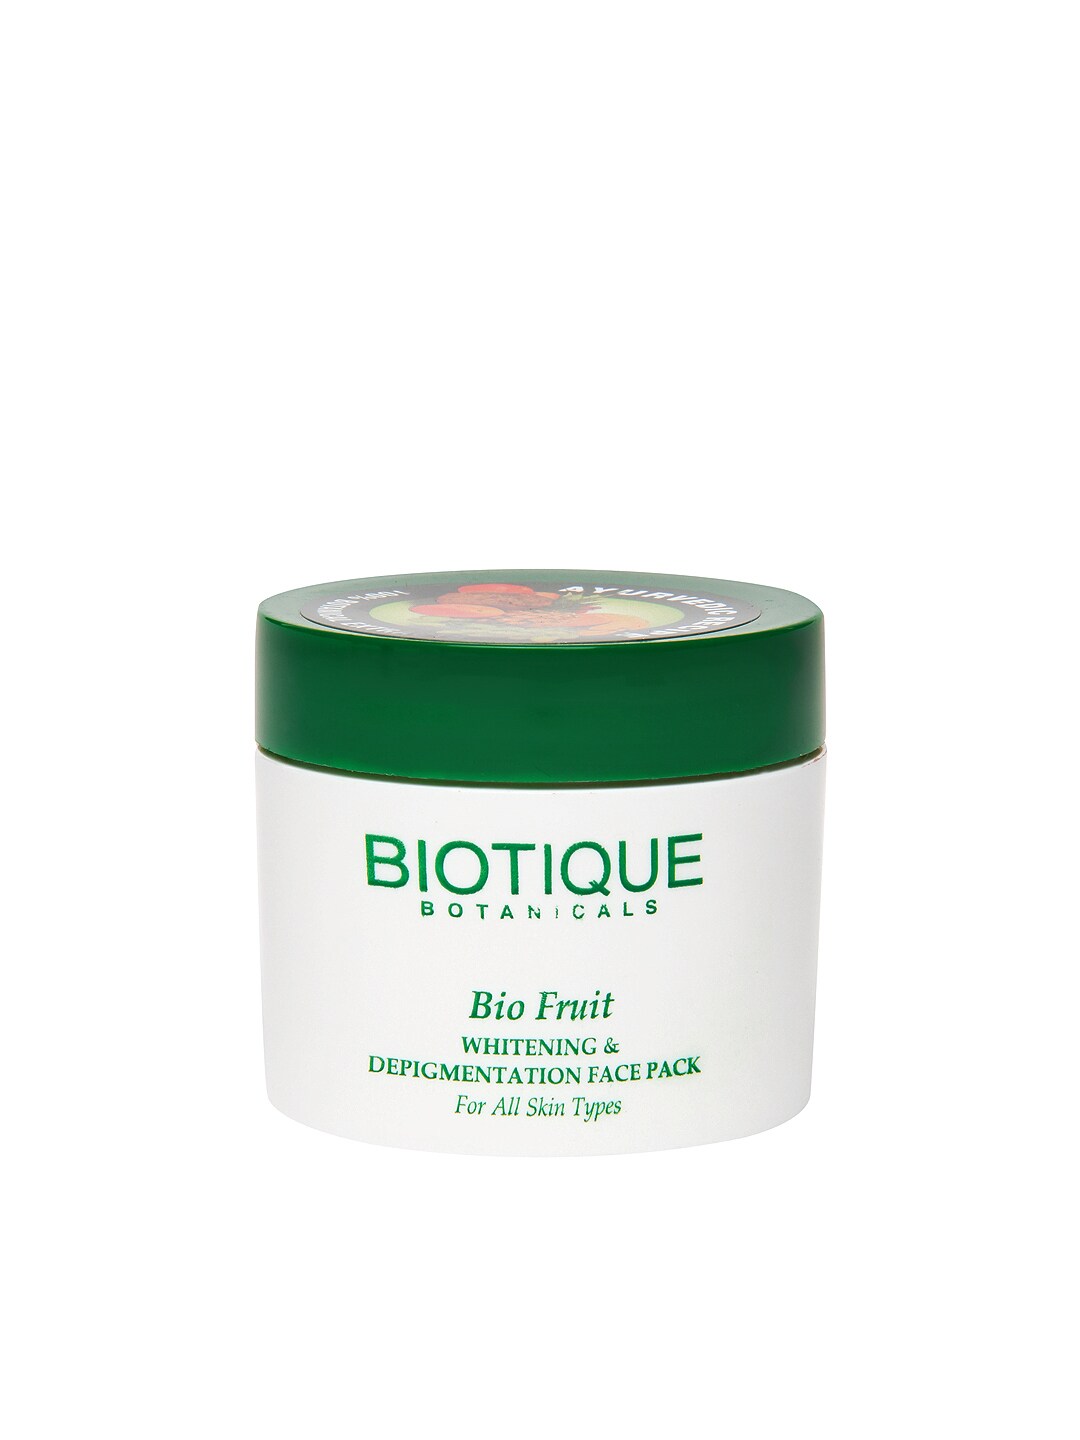 Biotique Bio Fruit Whitening and Depigmentation Face Pack